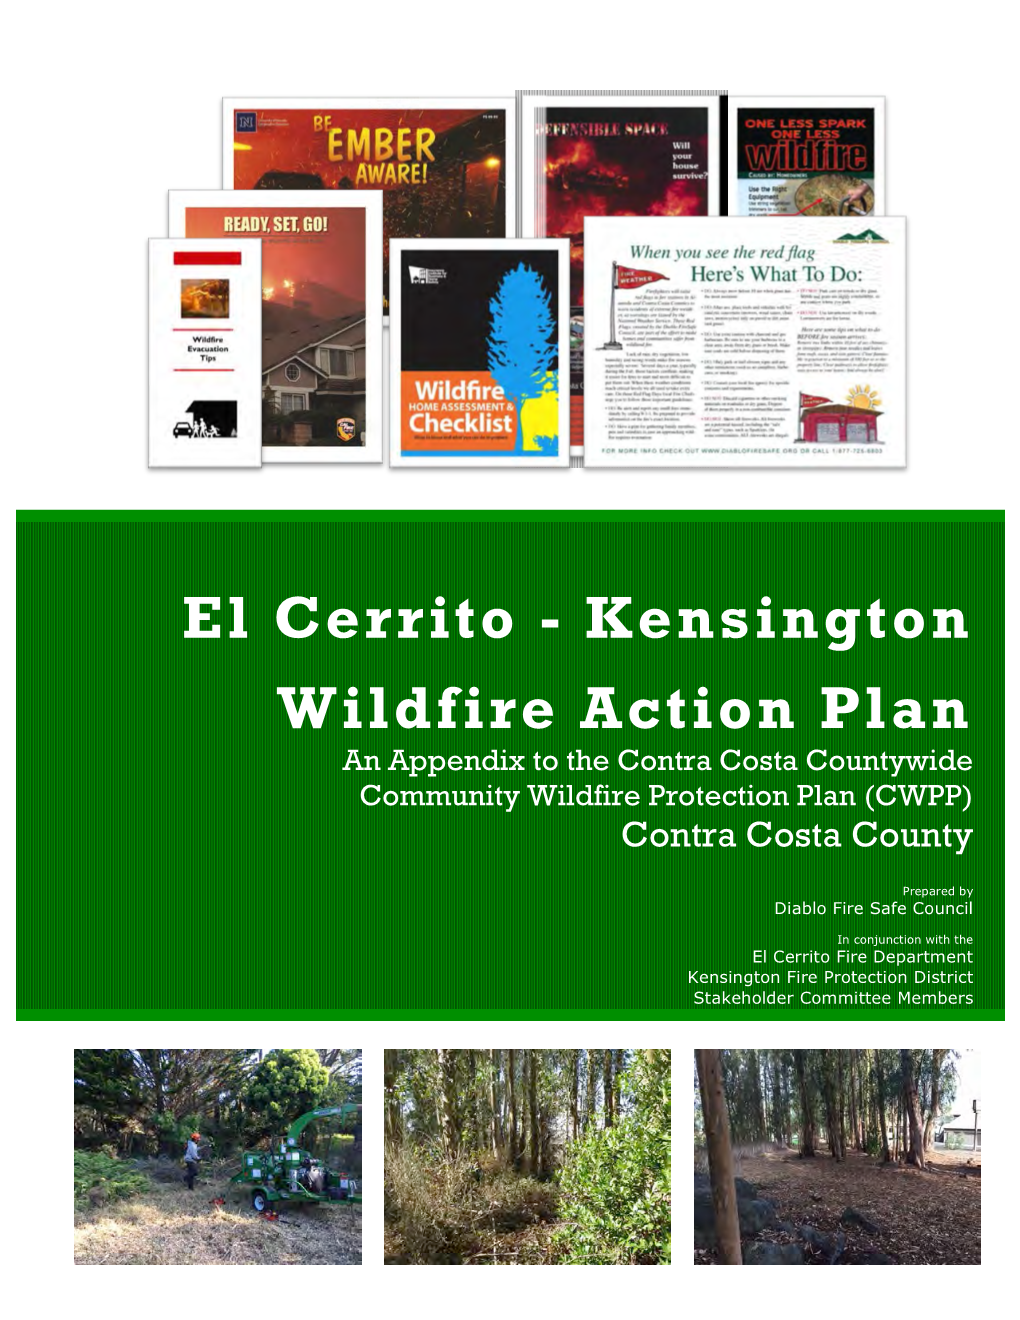 El Cerrito - Kensington Wildfire Action Plan an Appendix to the Contra Costa Countywide Community Wildfire Protection Plan (CWPP) Contra Costa County